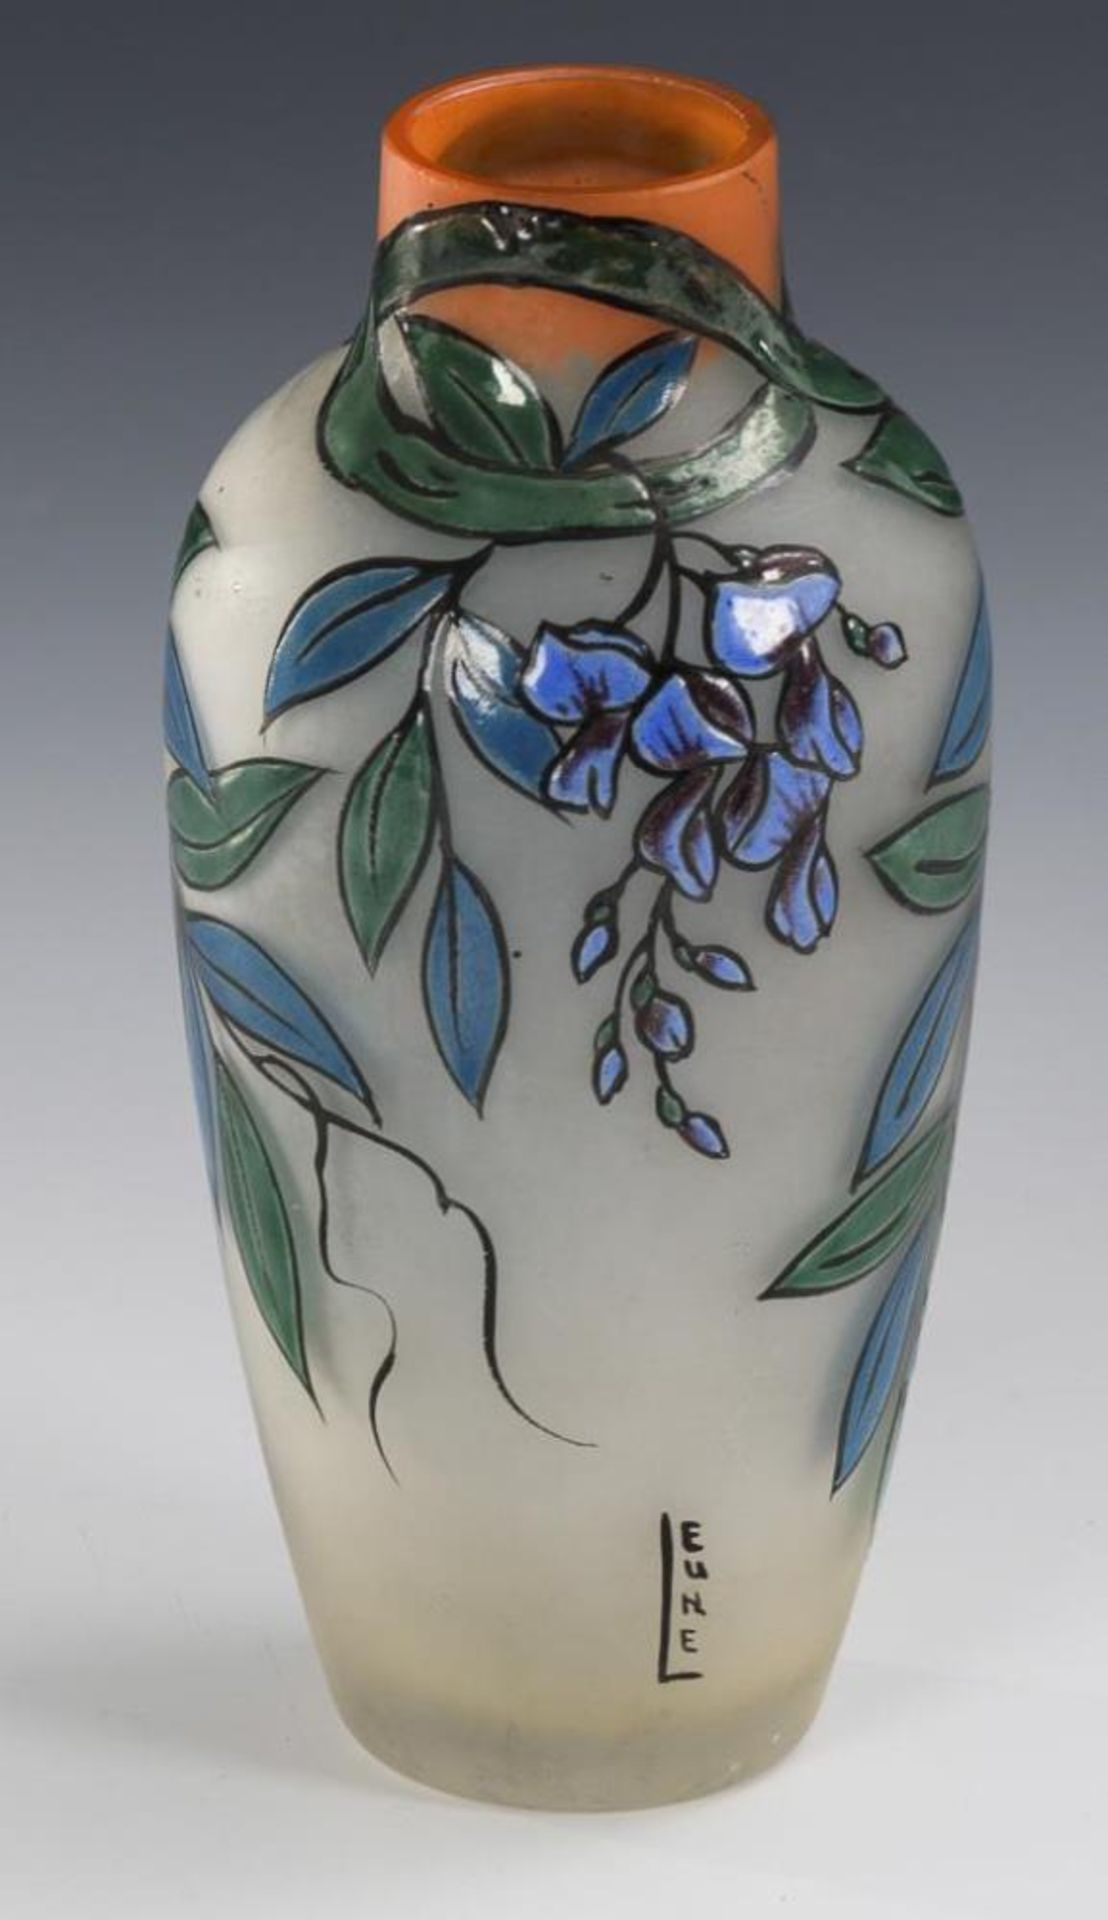 Jugendstil-Vase mit Emailmalerei. Leune. - Image 2 of 2